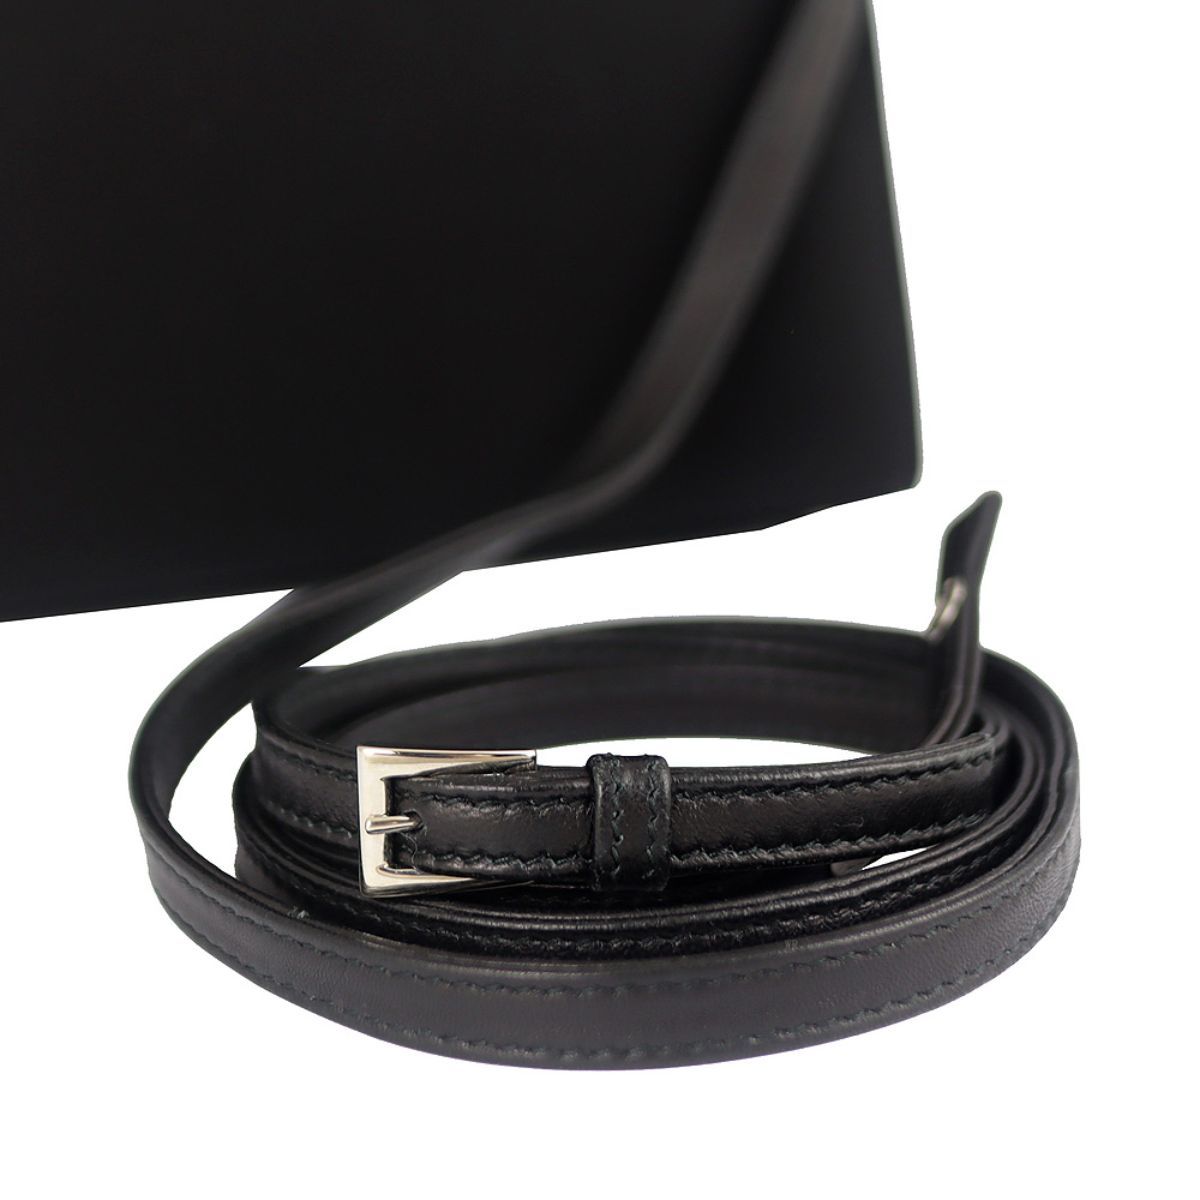 Prada Tessuto Foulard Handbag w Silk Wrapped Handle Black Petalo 1BA656 at_Queen_Bee_of_Beverly_Hills